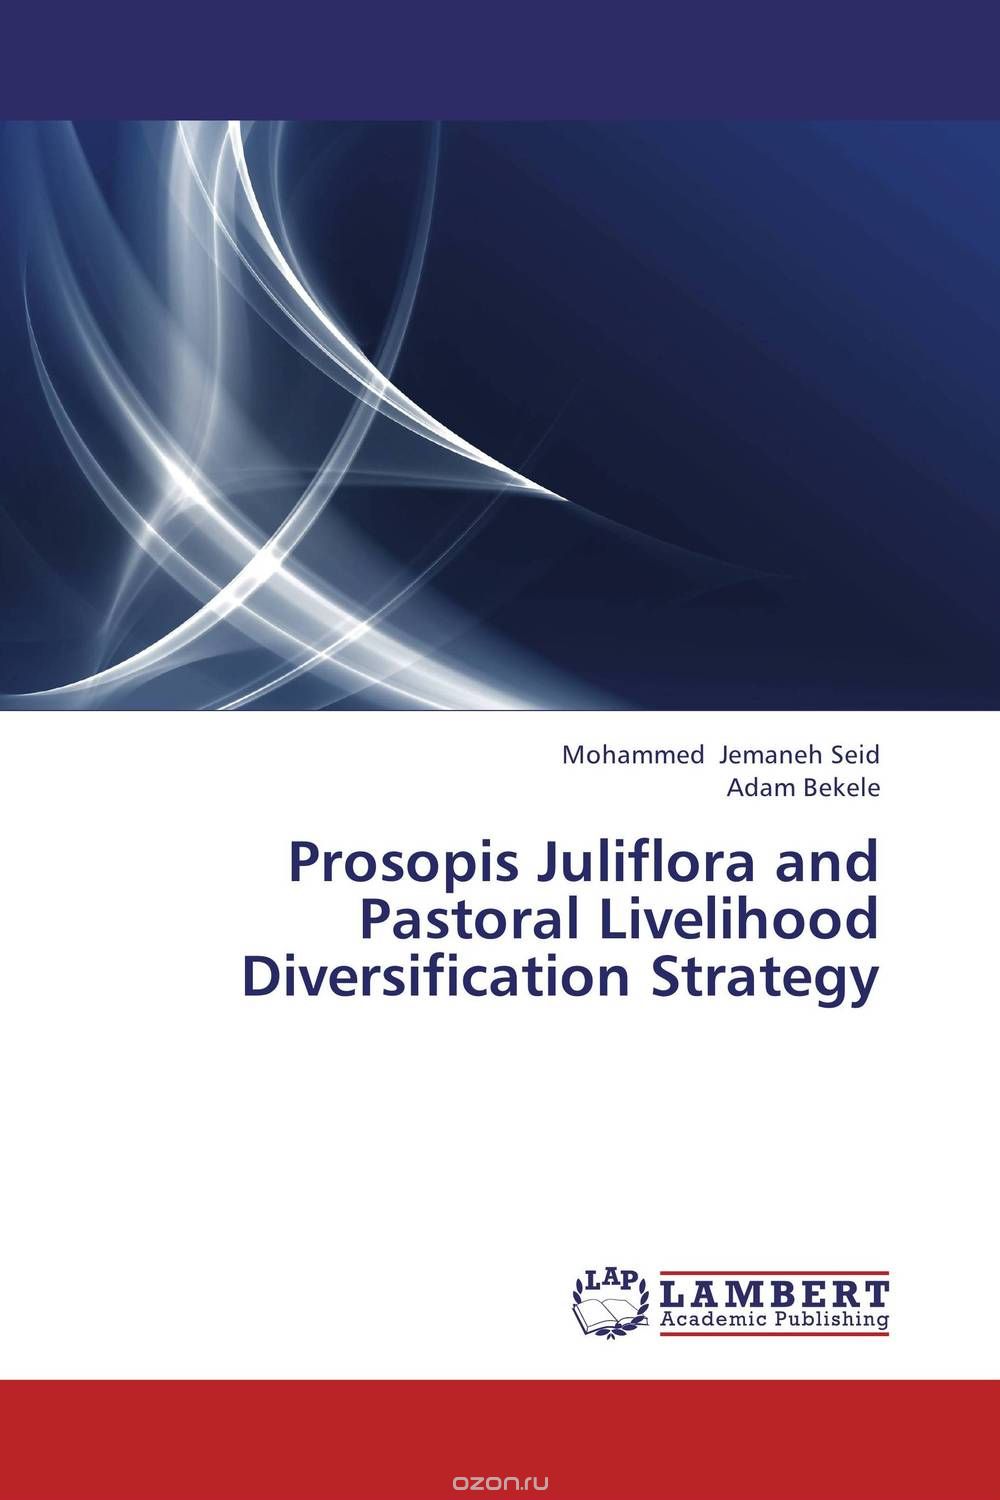 Скачать книгу "Prosopis Juliflora and Pastoral Livelihood Diversification Strategy"